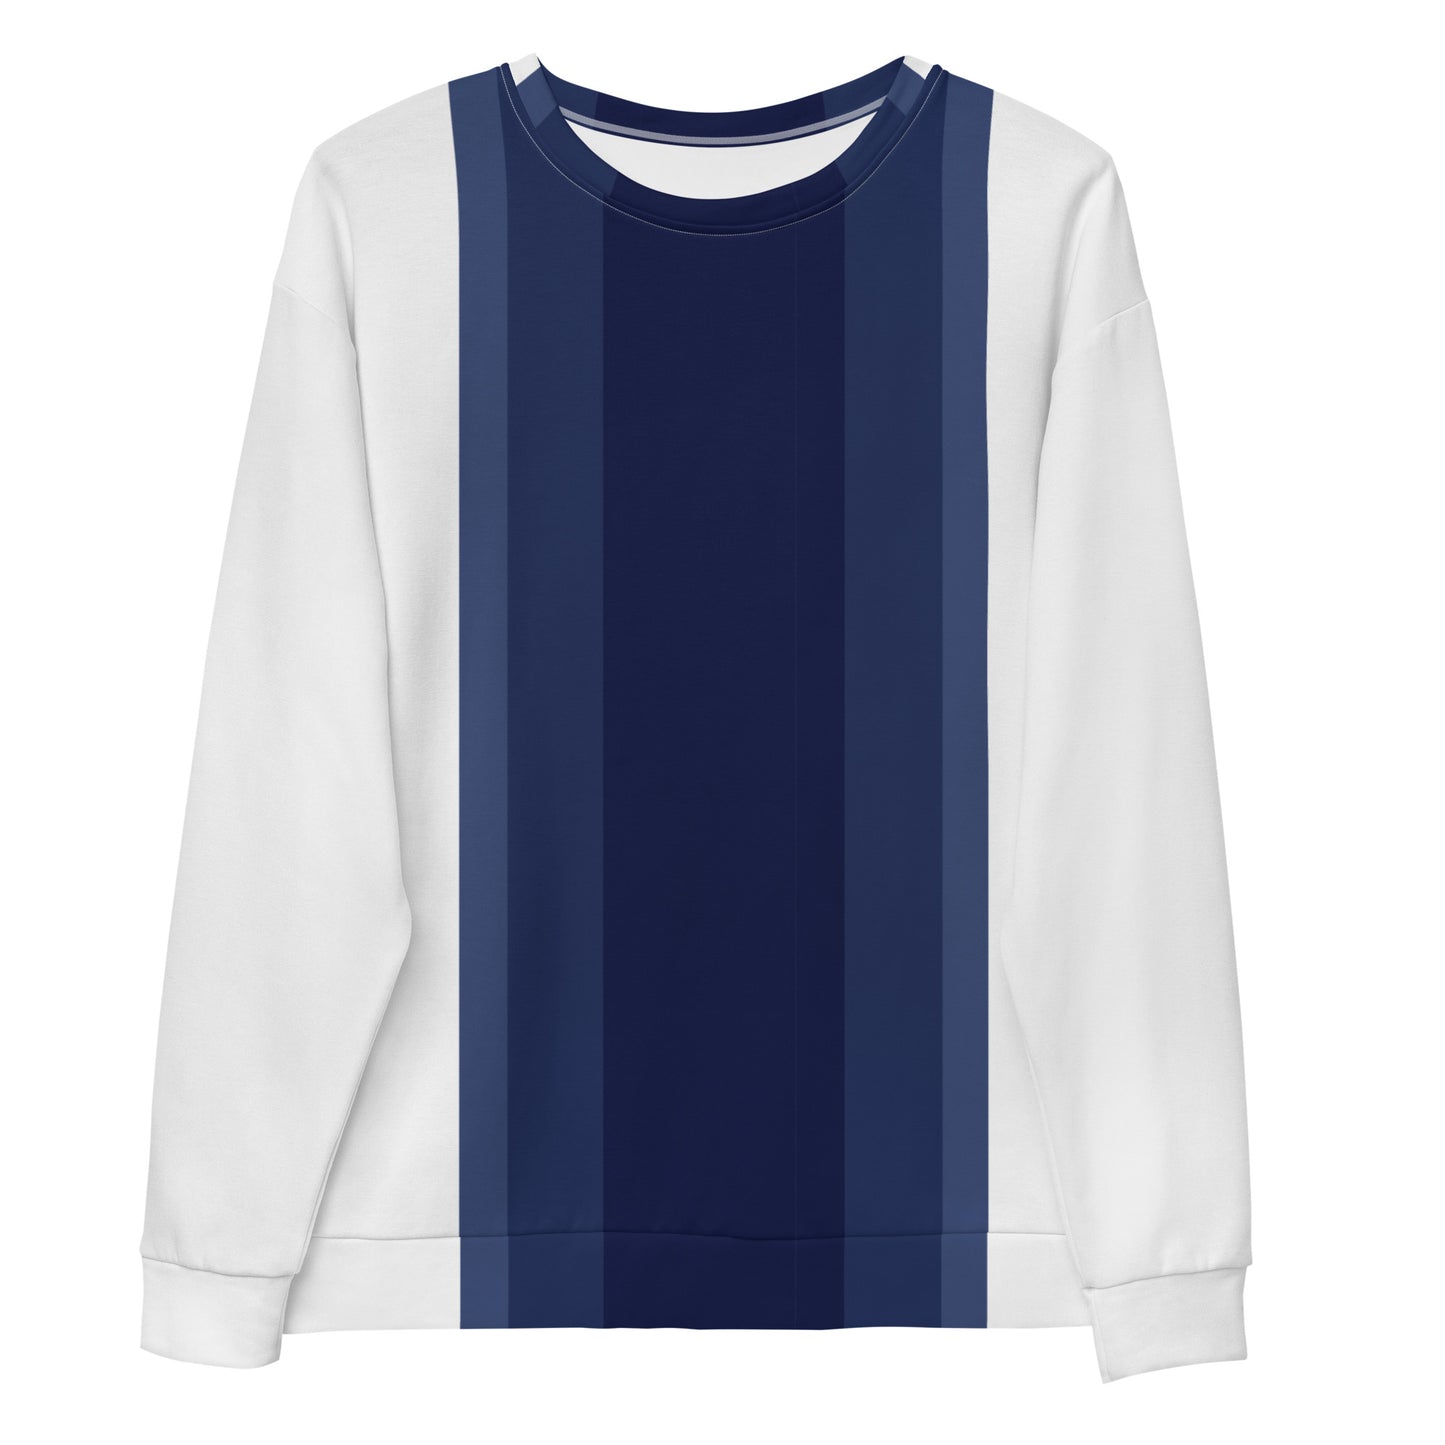 Vertical Lines Blue Block - Sustainably Made Sweatshirt